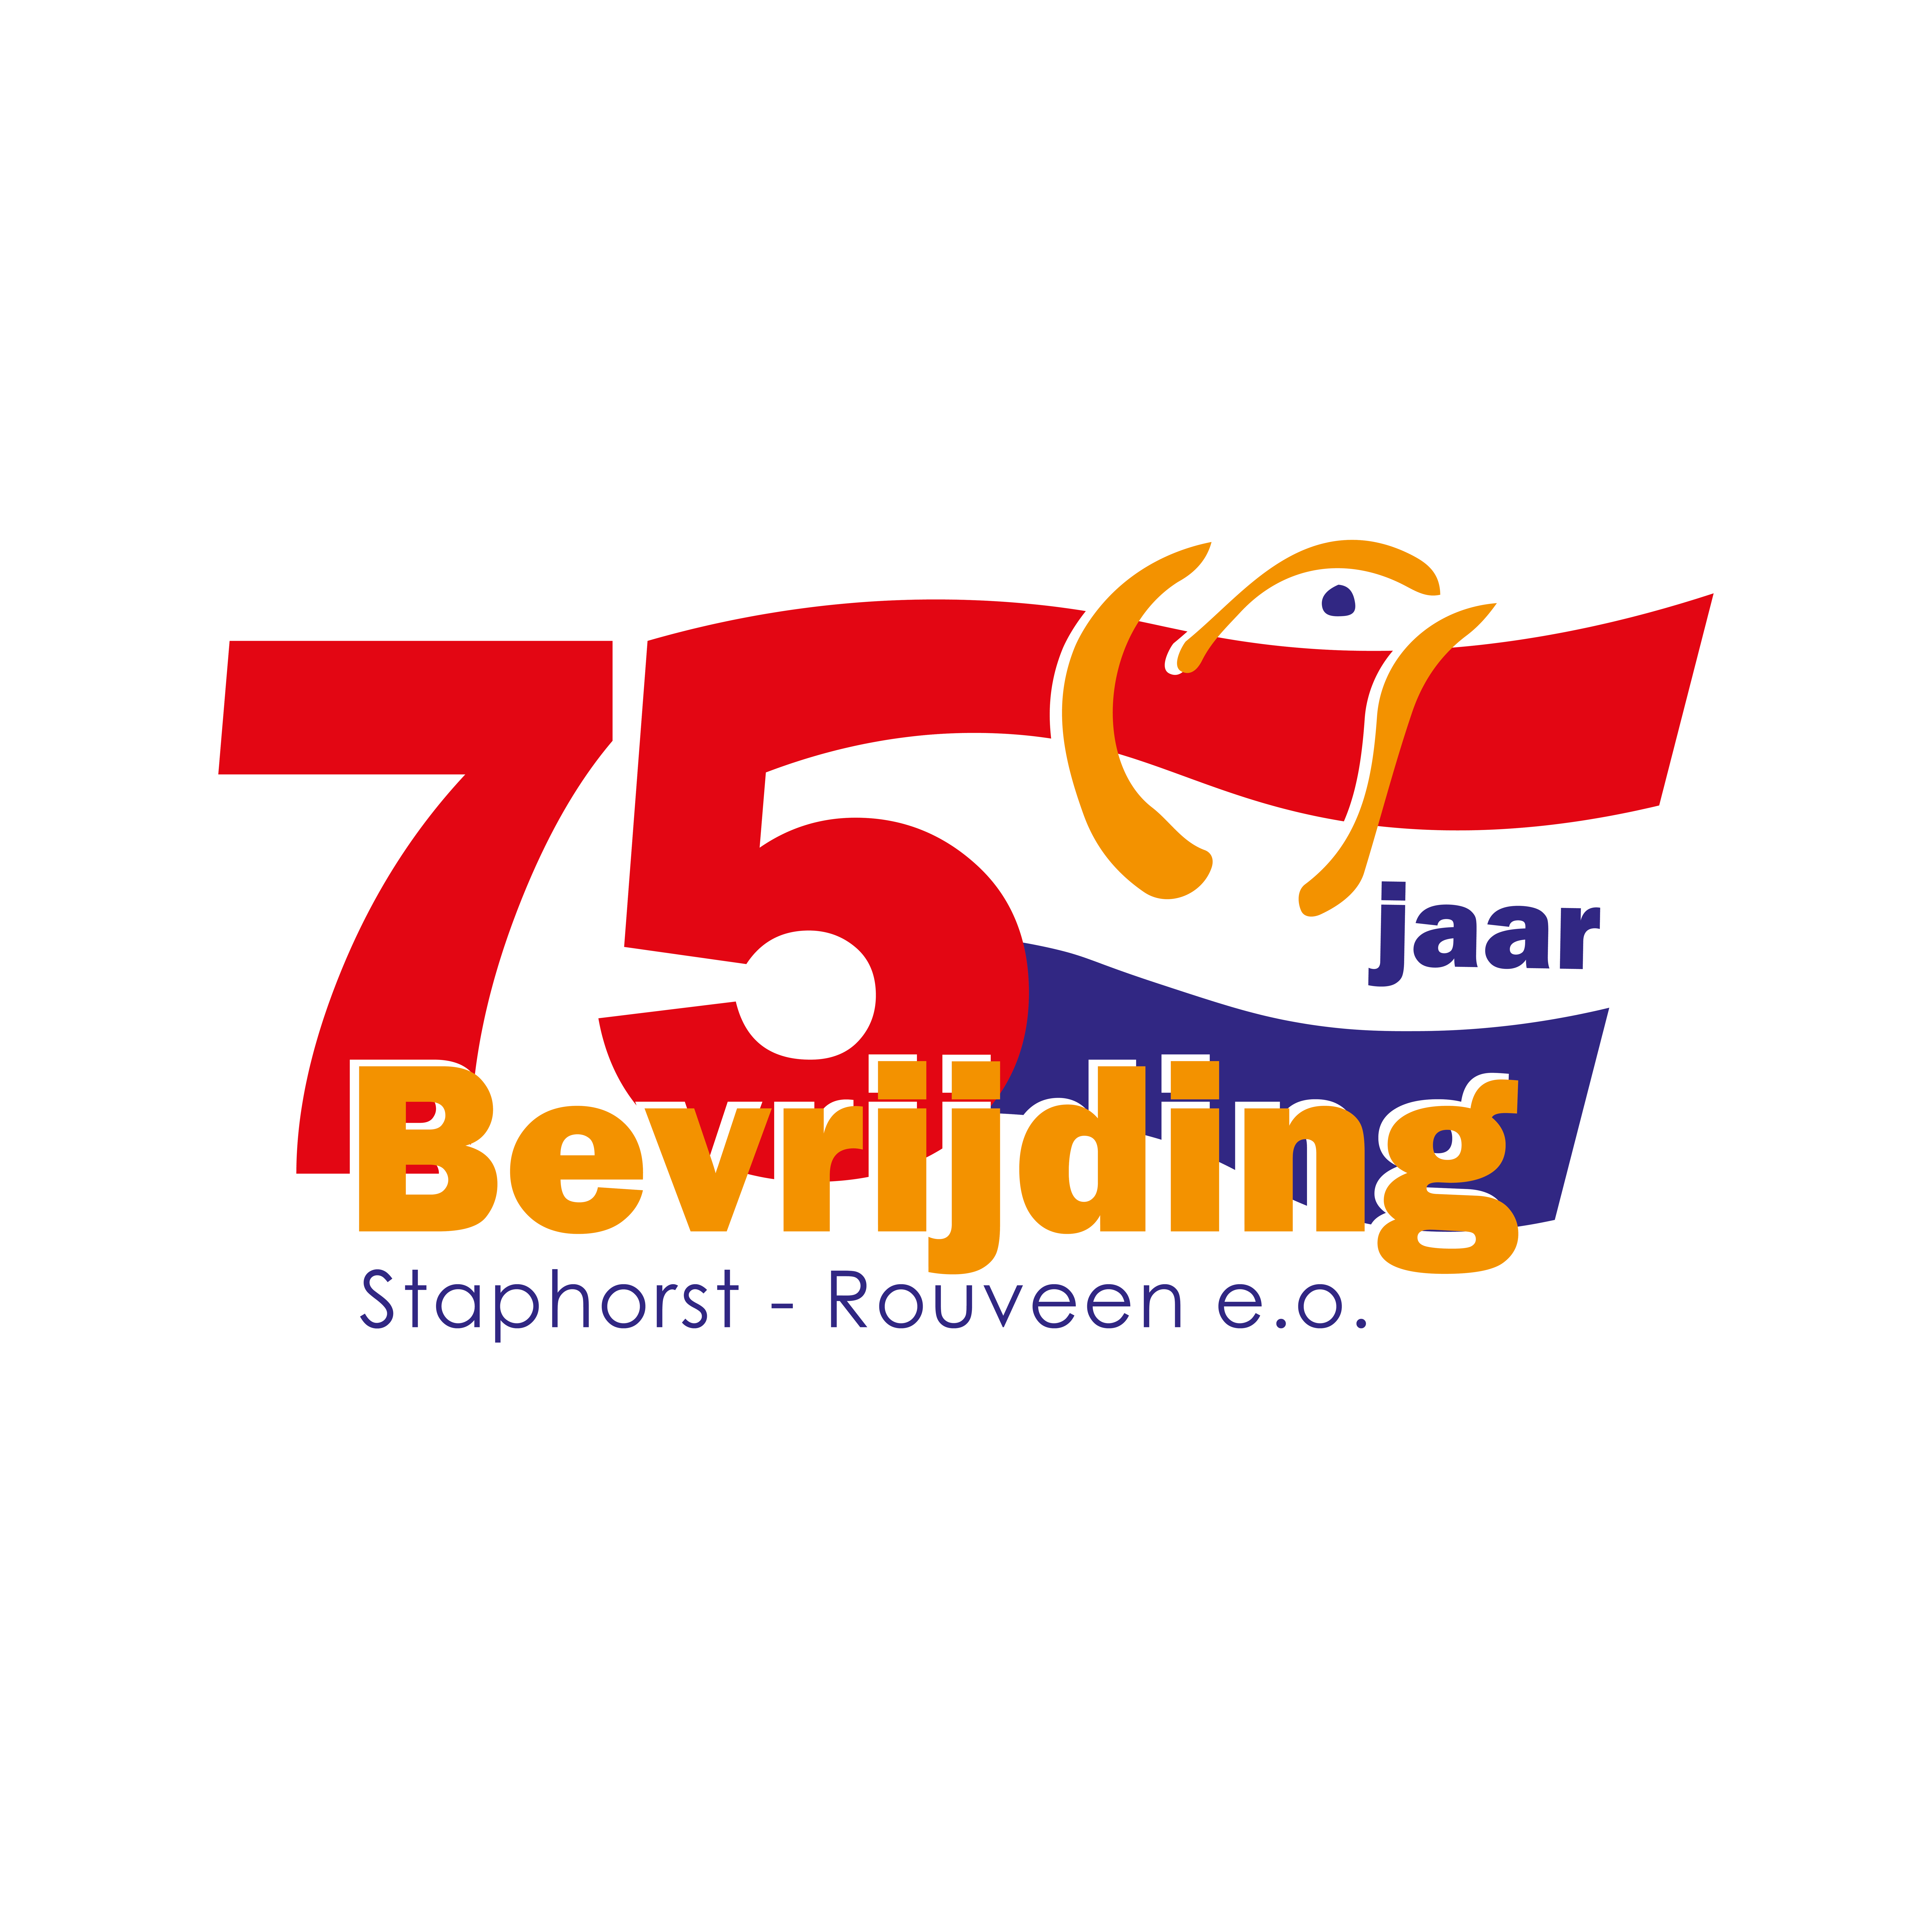 75 jaar Bevrijding Staphorst-Rouveen e.o.